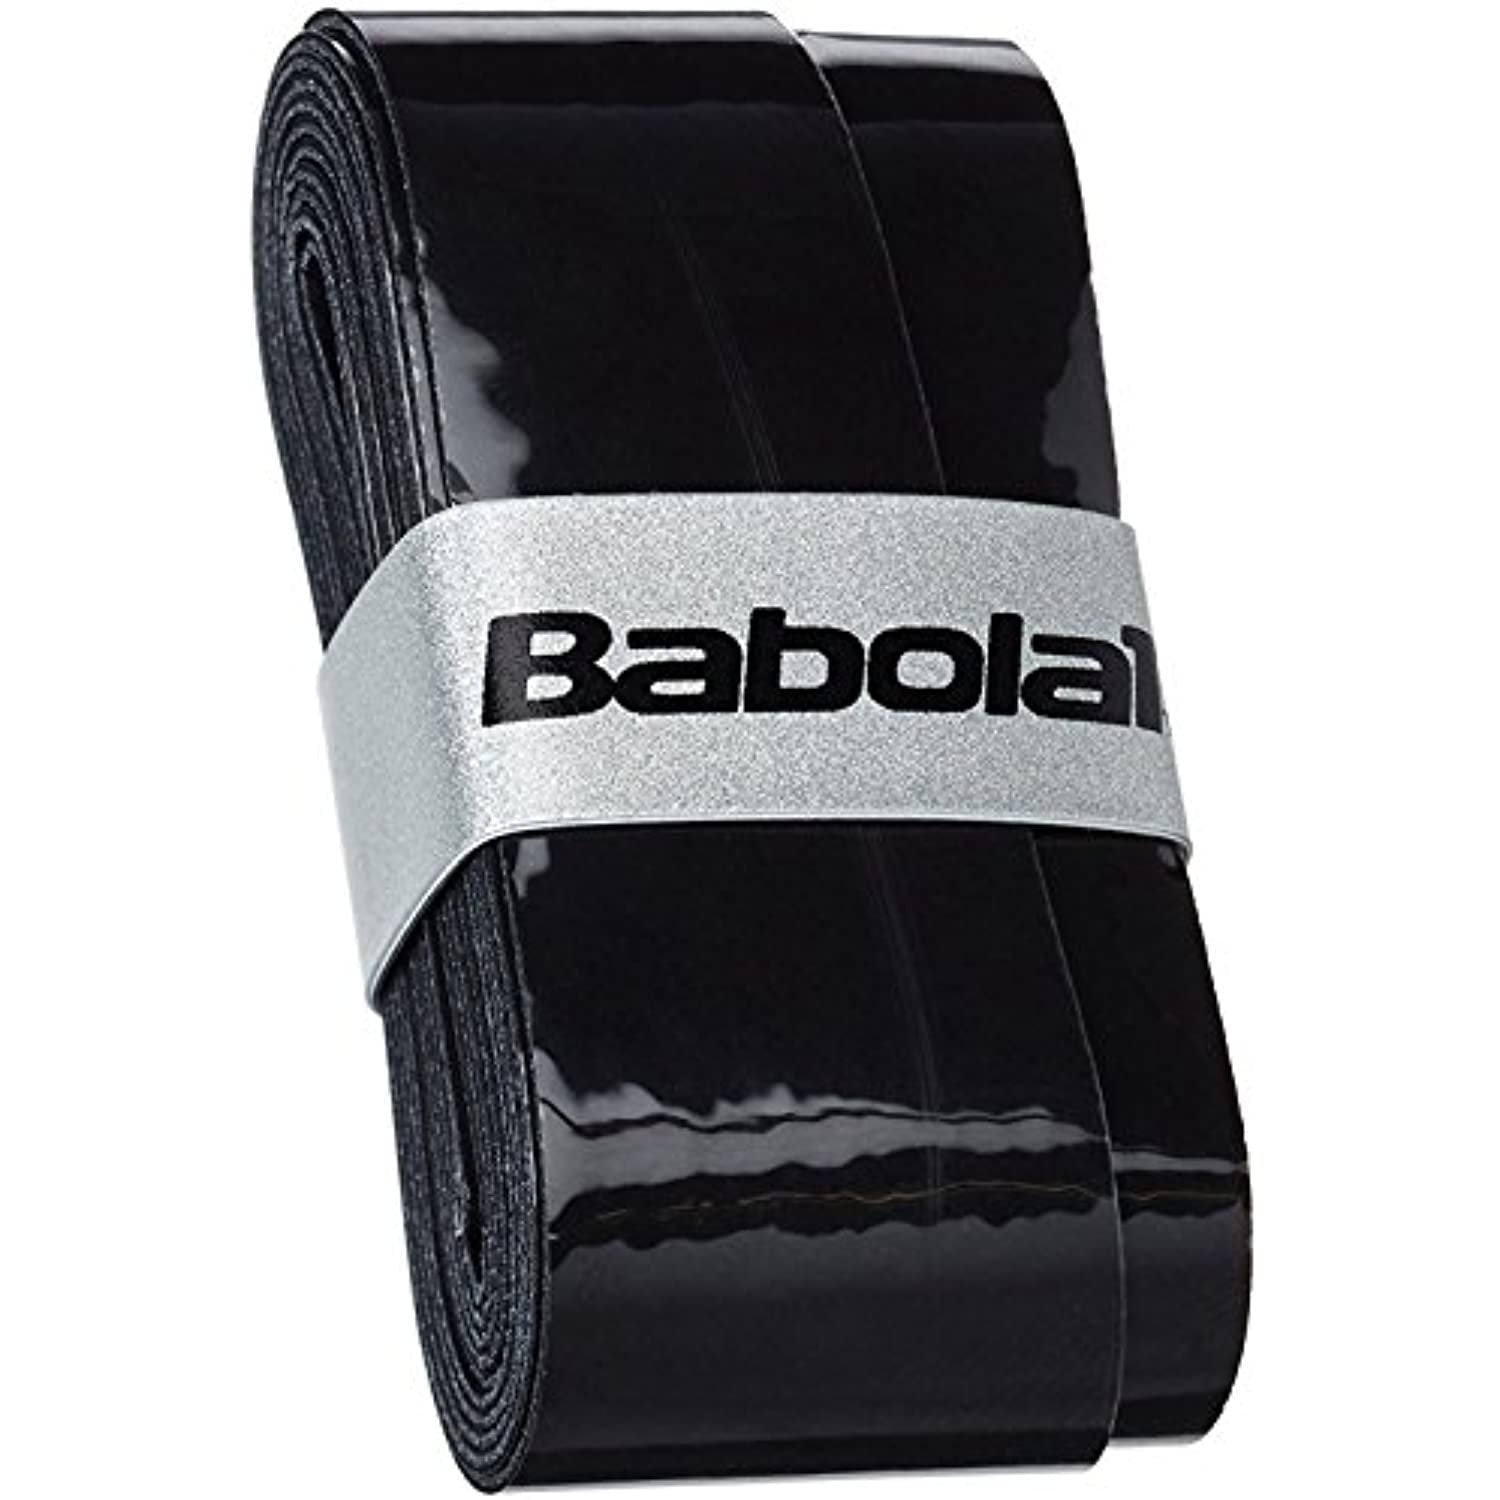 Babolat Pro Tour Tennis Grip - Black